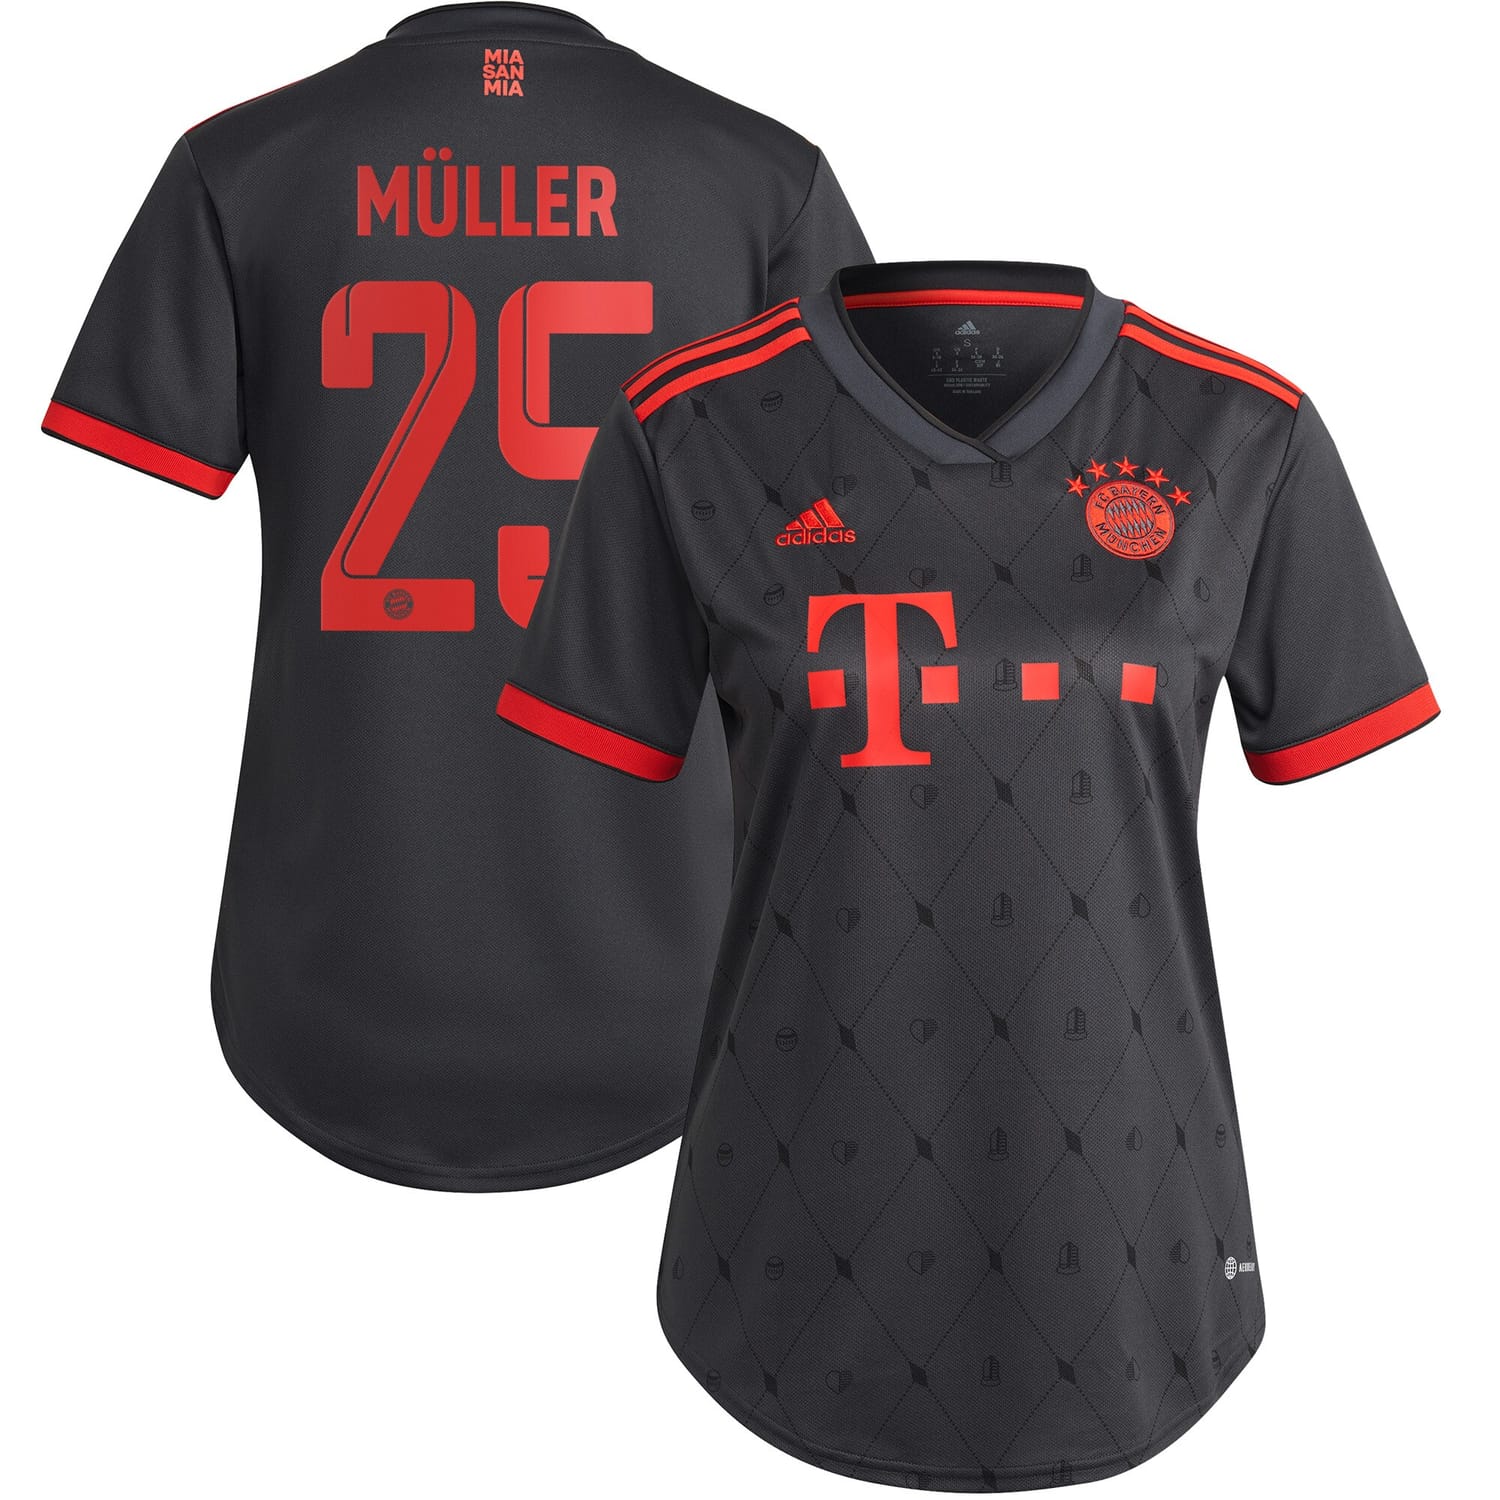 Bundesliga Bayern Munich Third Jersey Shirt Charcoal 2022-23 player Thomas Müller printing for Women